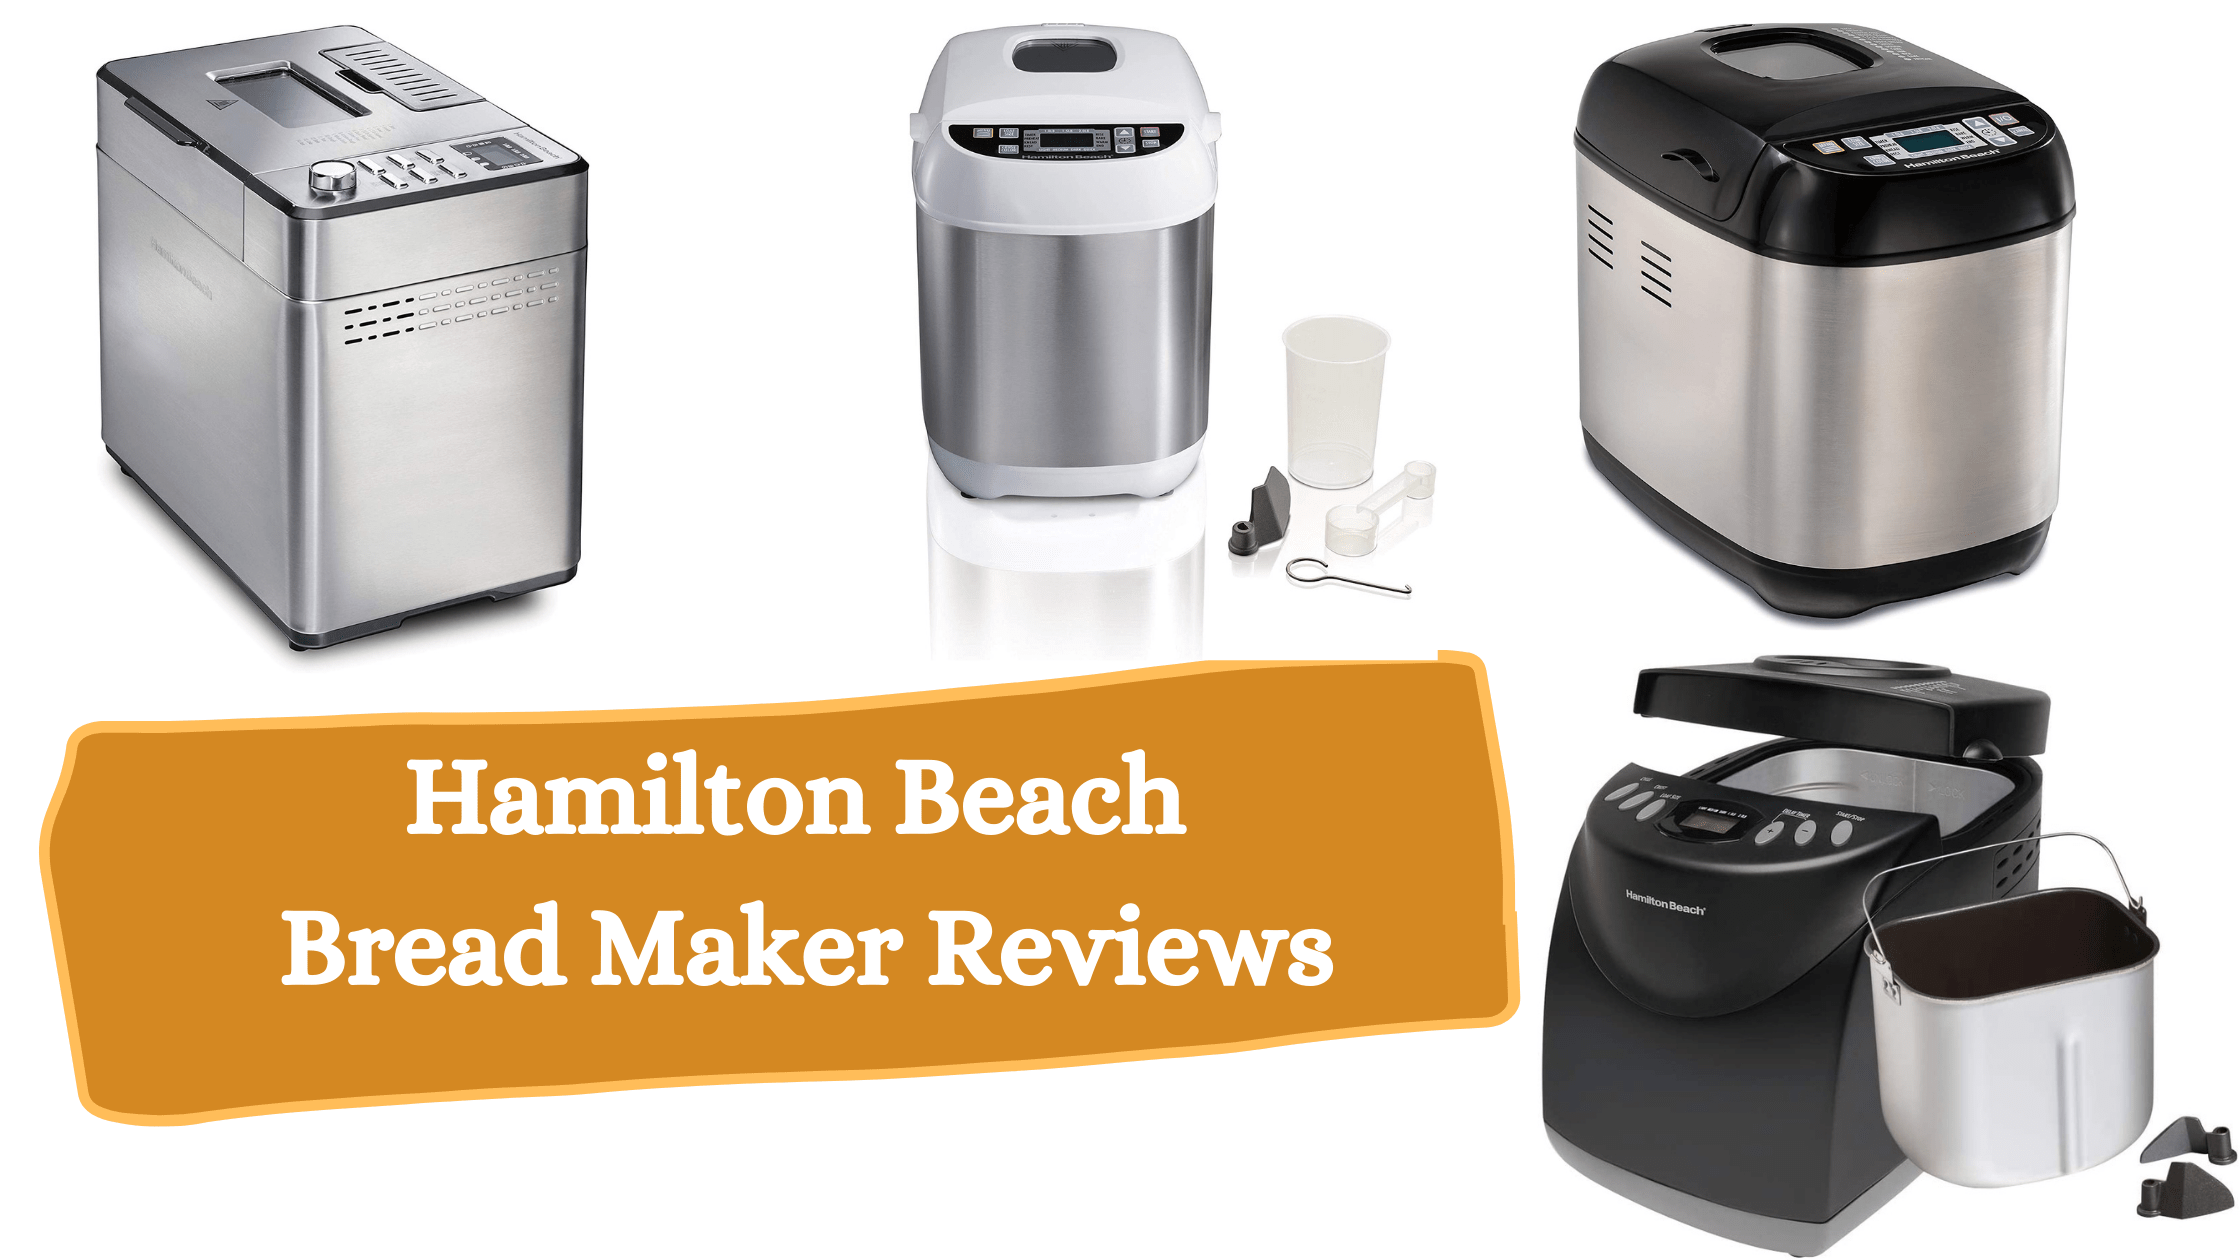 Hamilton Beach Bread Maker Reviews